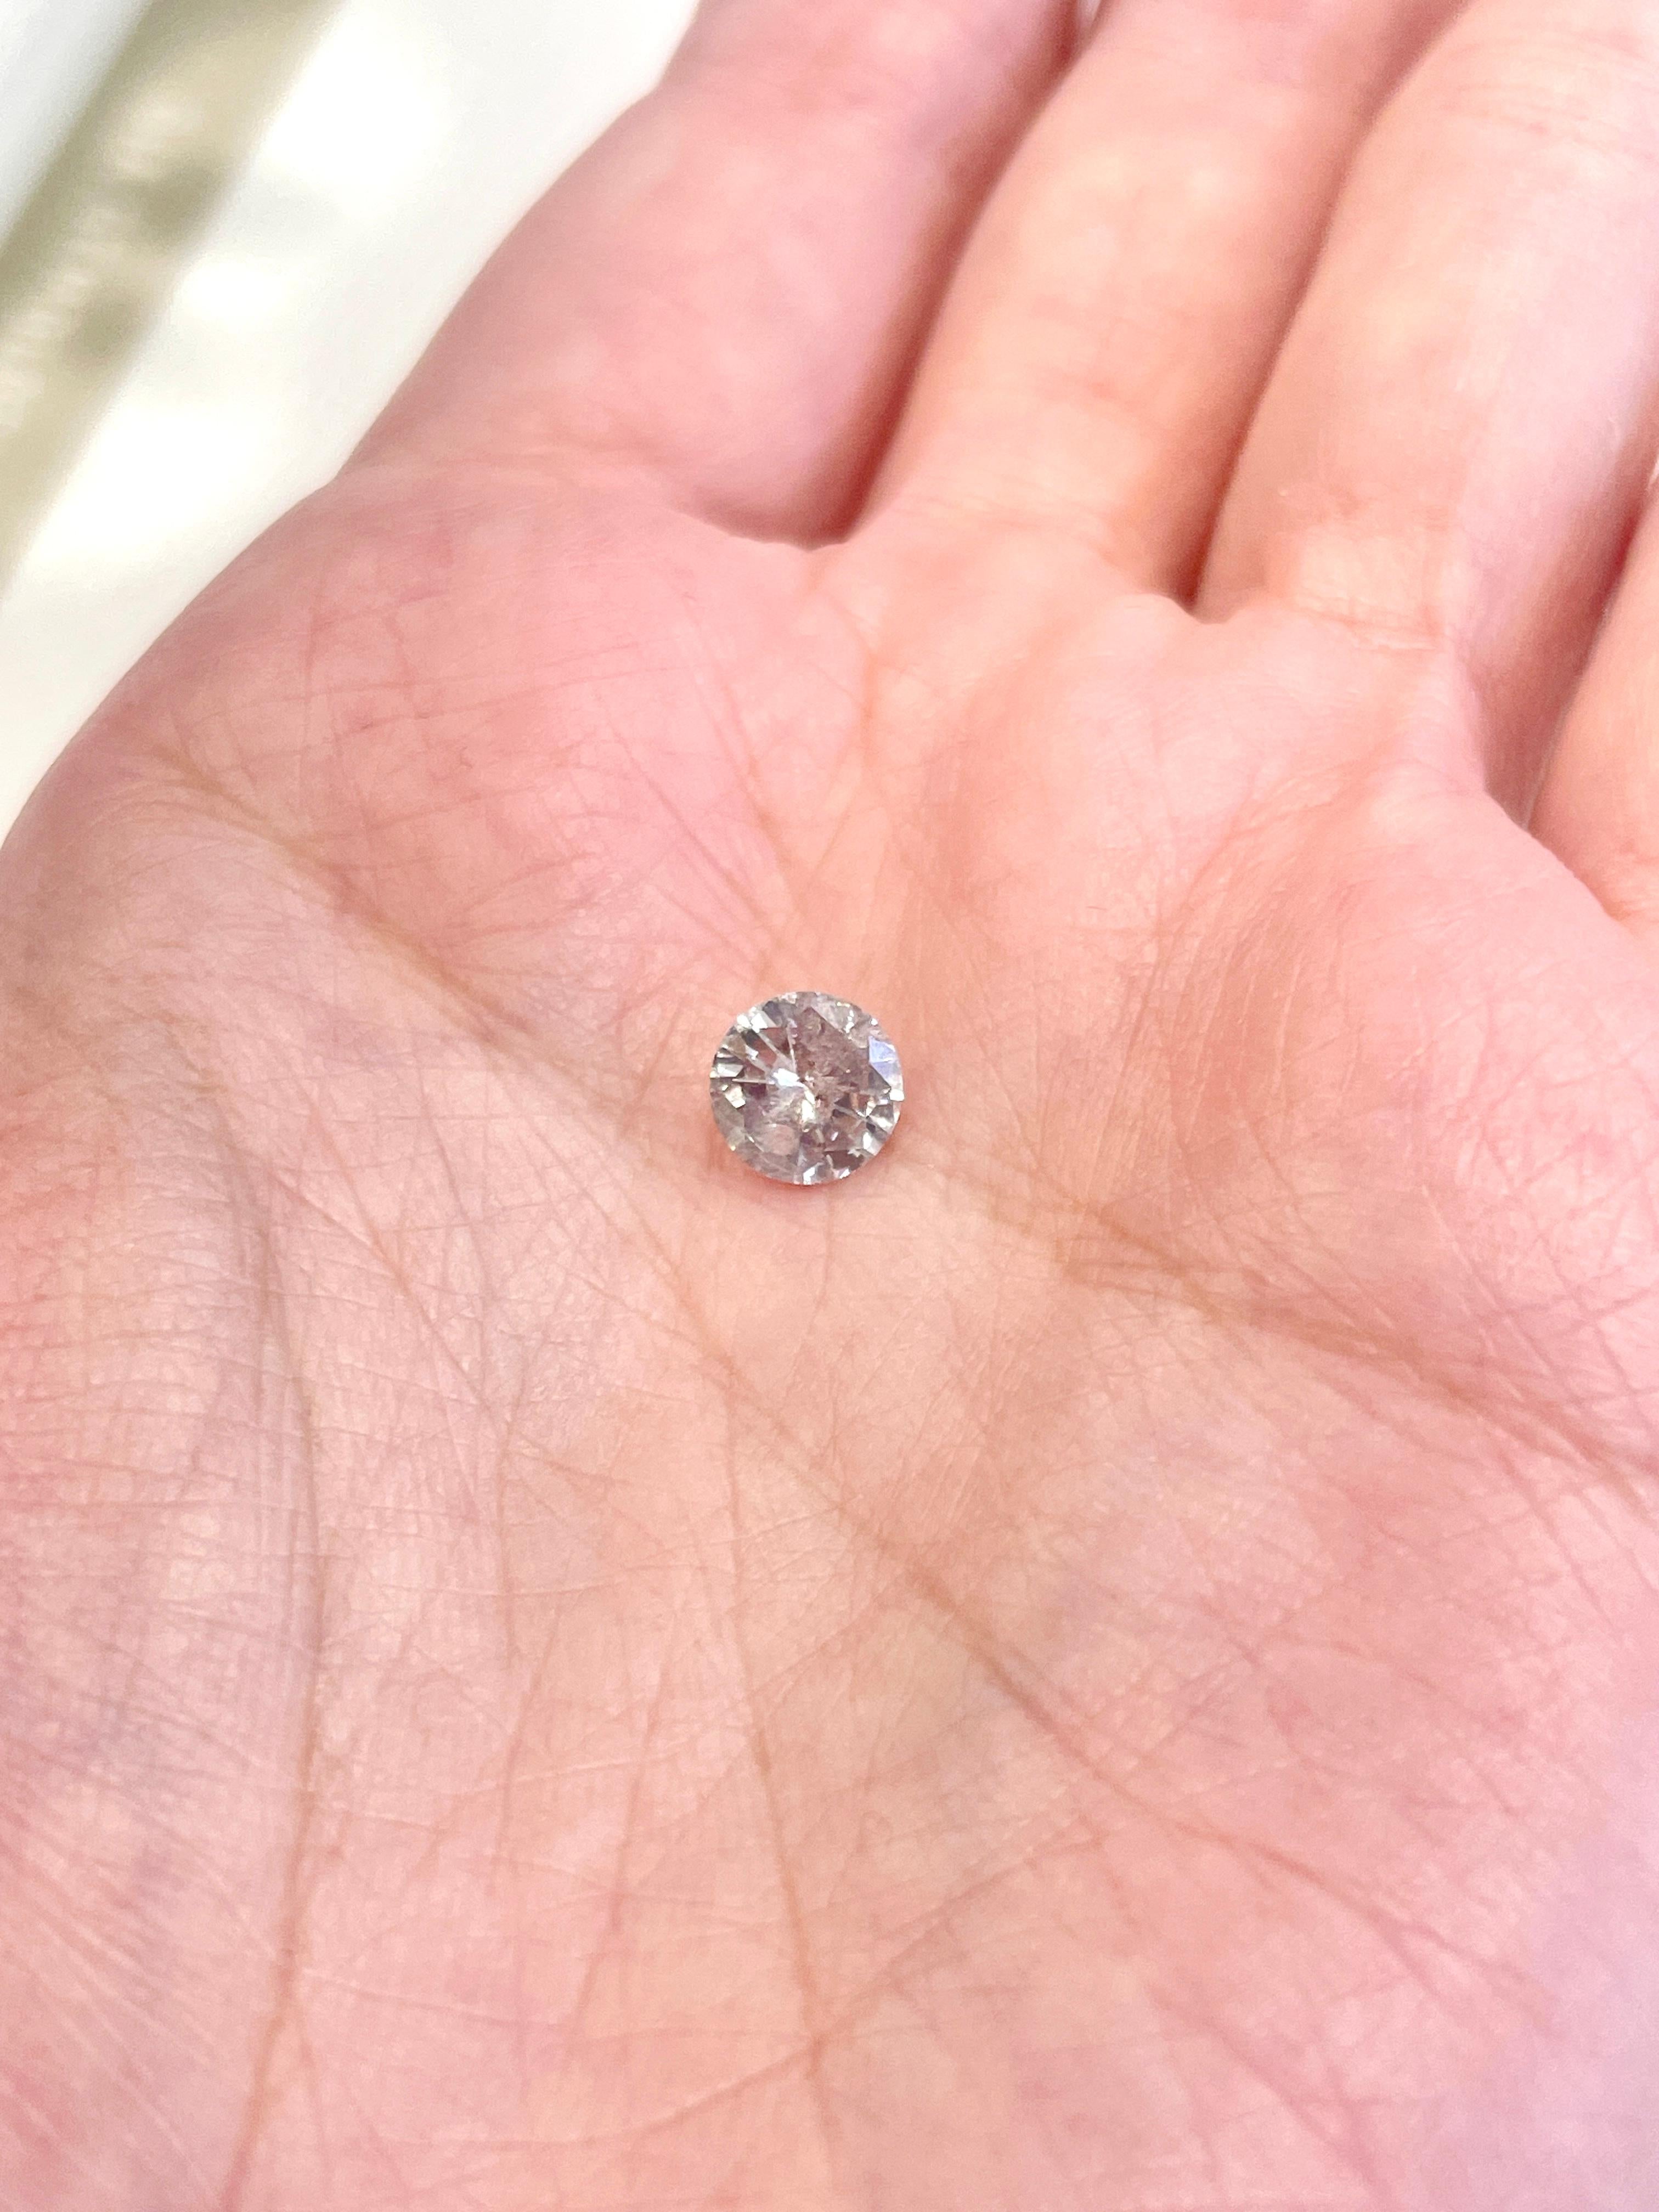 14 carat diamond size